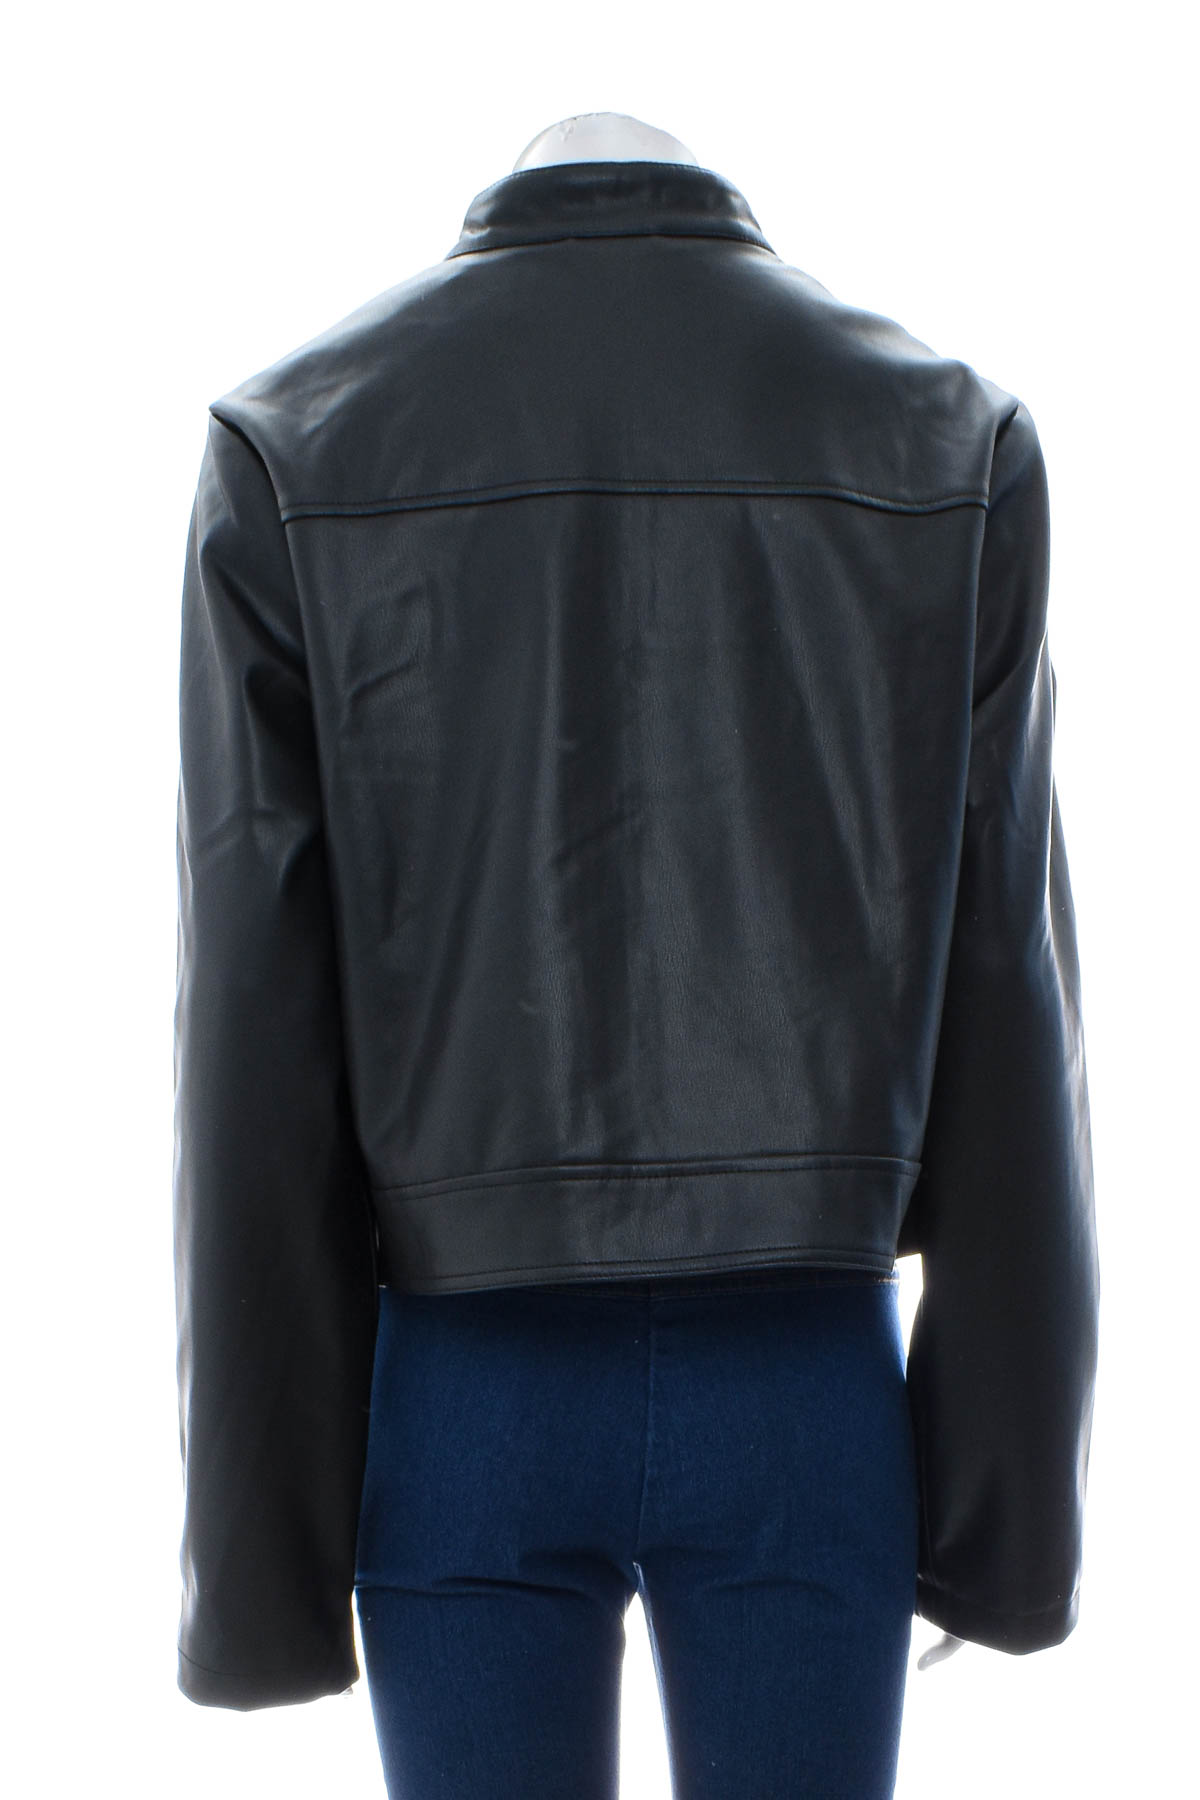 Women's leather jacket - Asos - 1